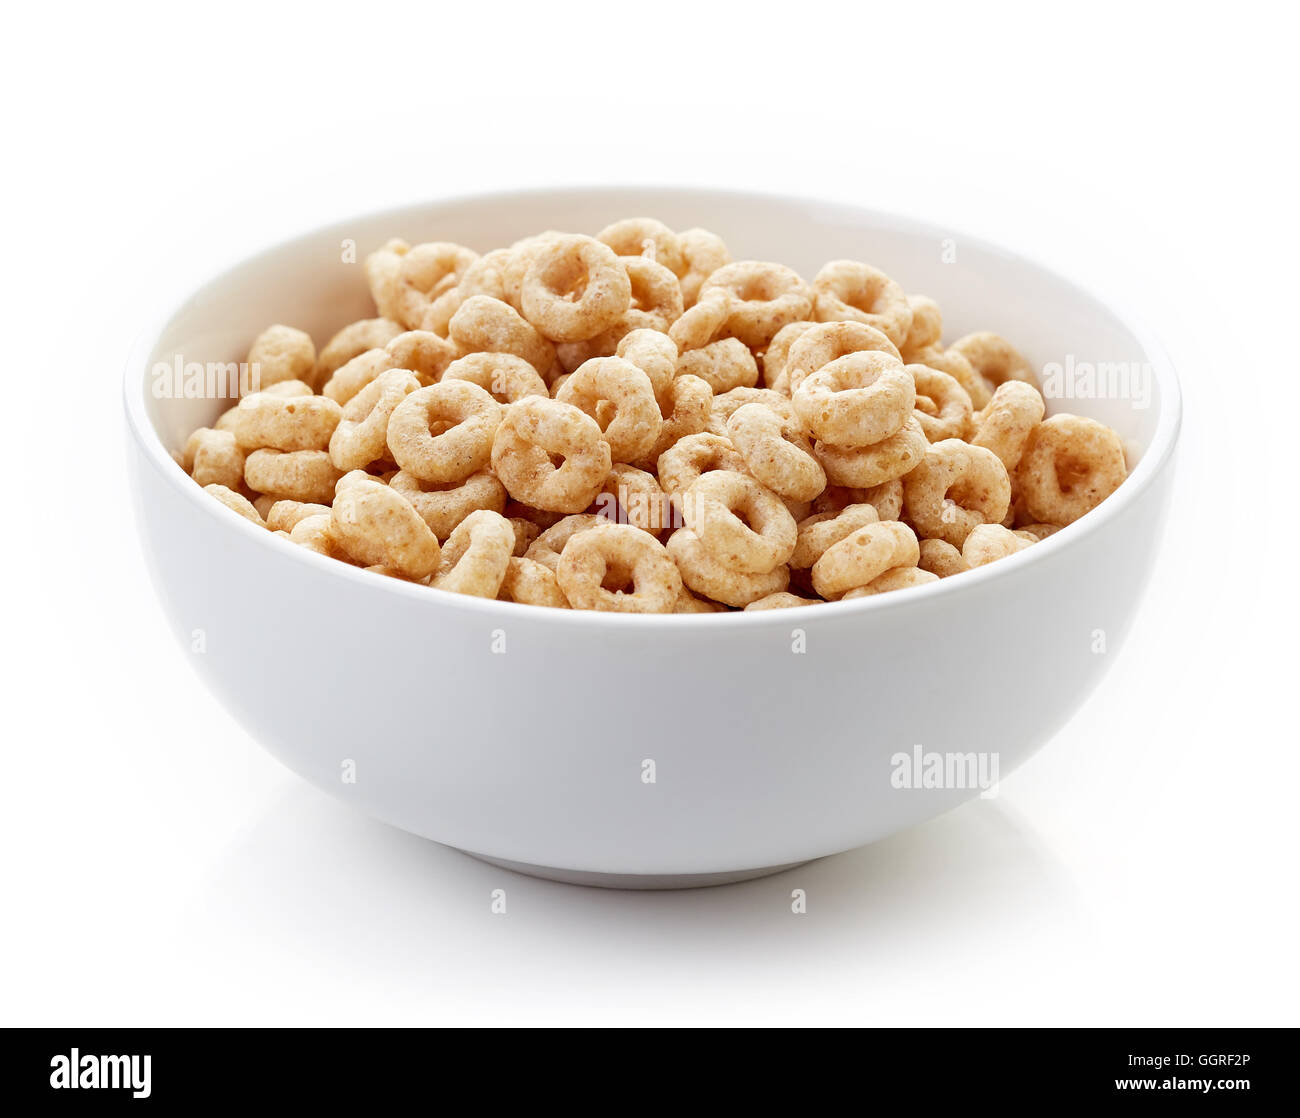 heart bowl of cheerios